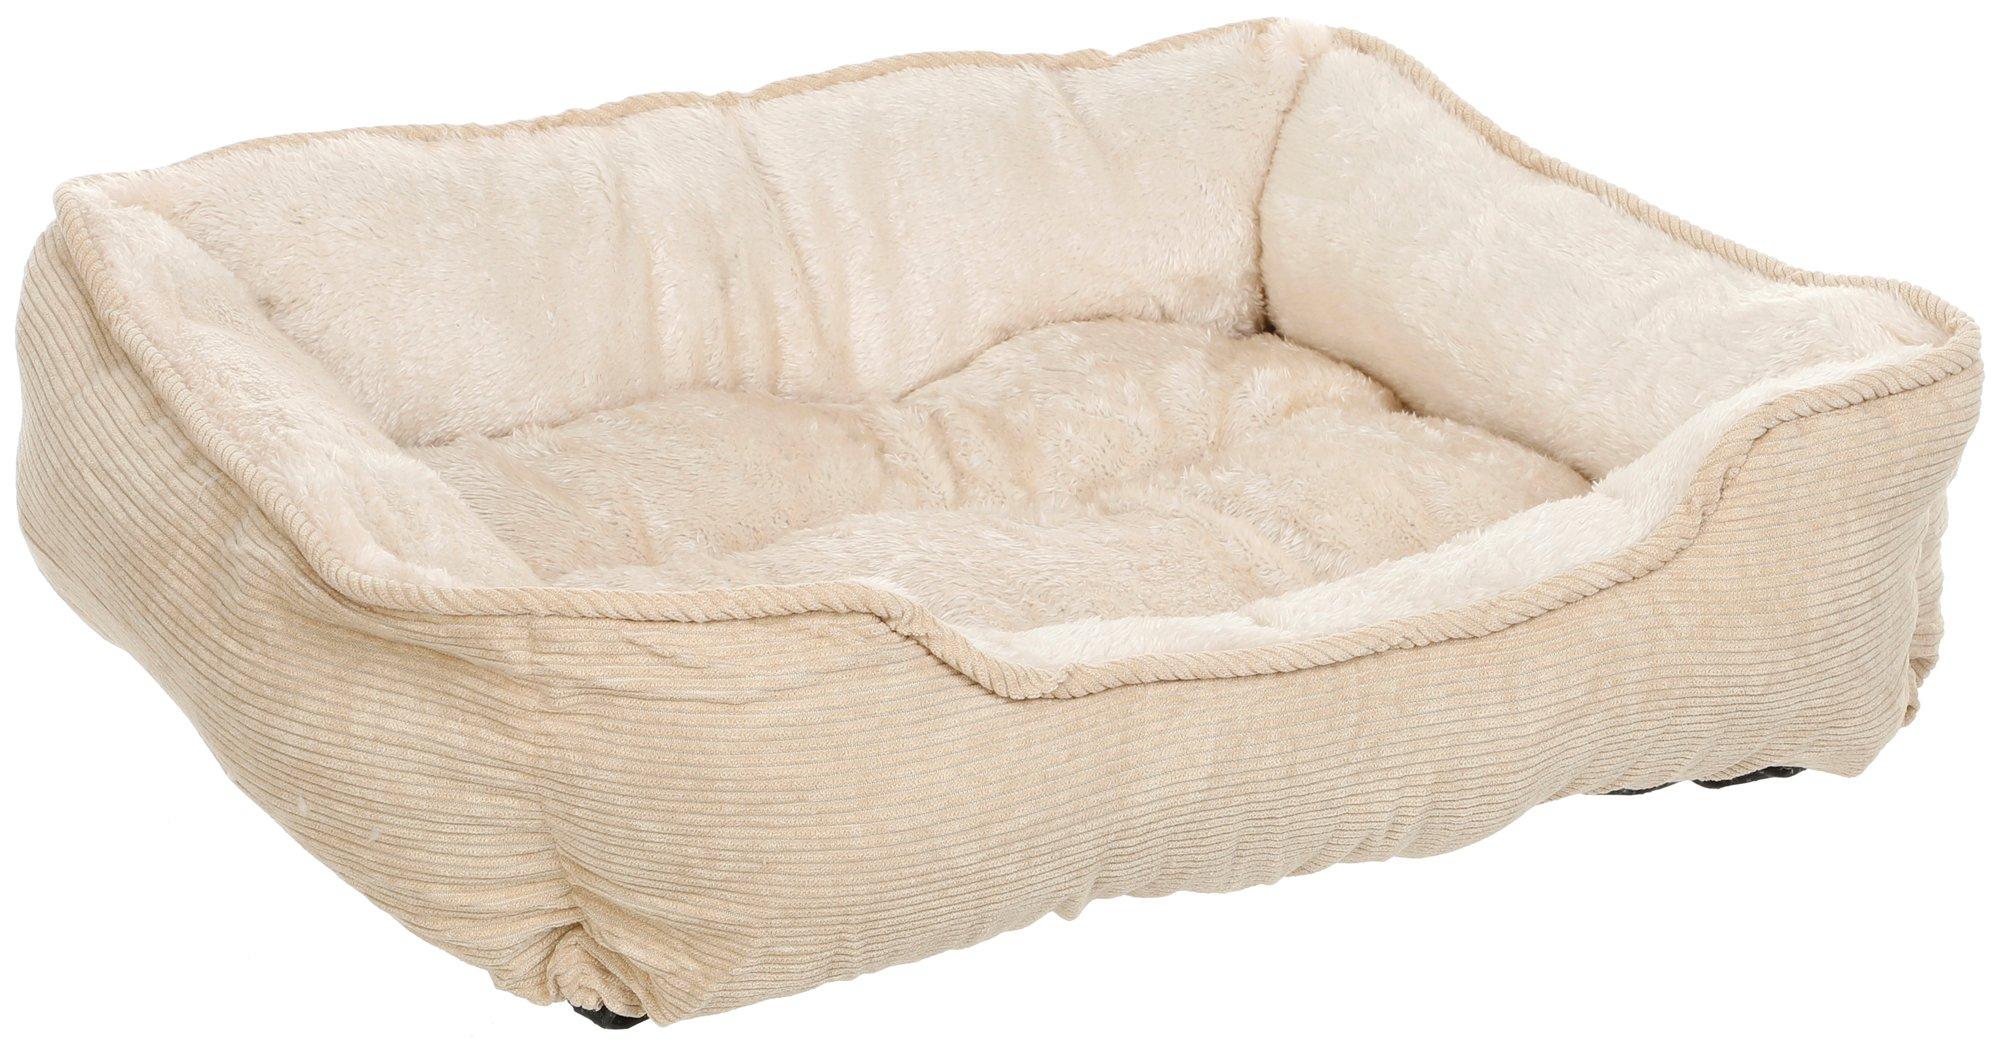 22x18 Corduroy Plush Pet Bed